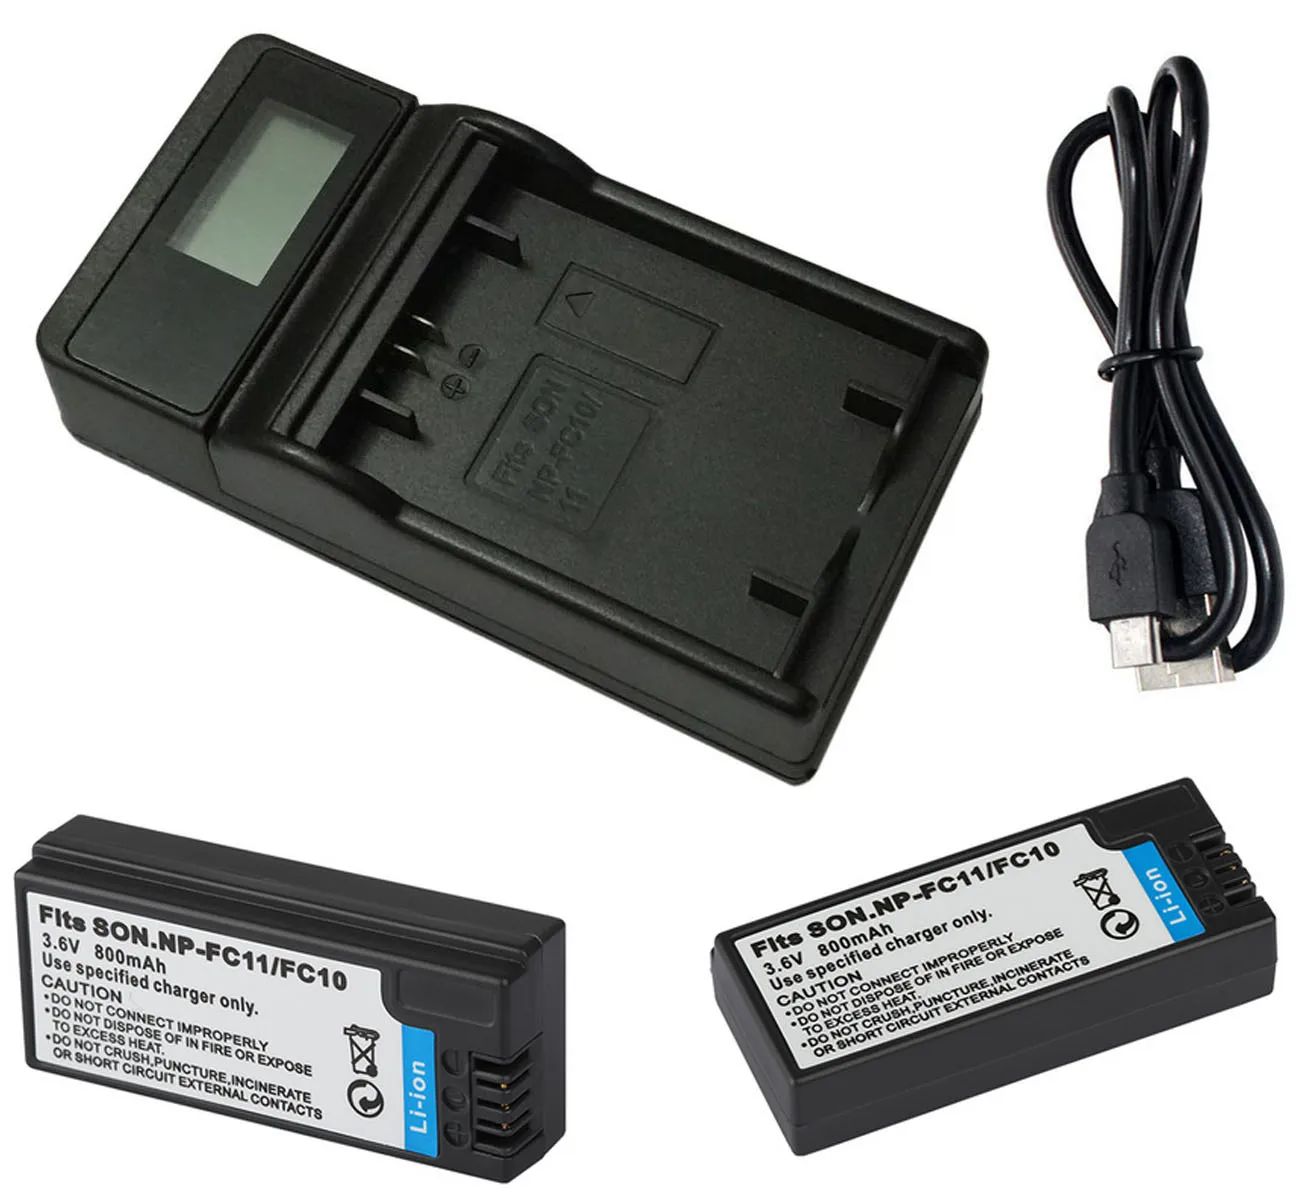 

Battery +Charger for Sony Cyber-Shot DSC-P7, DSC-P8, DSC-P8E, DSC-P8L, DSC-P8R, DSC-P8S, DSC-P9, DSC-P10, DSC-P12 Digital Camera